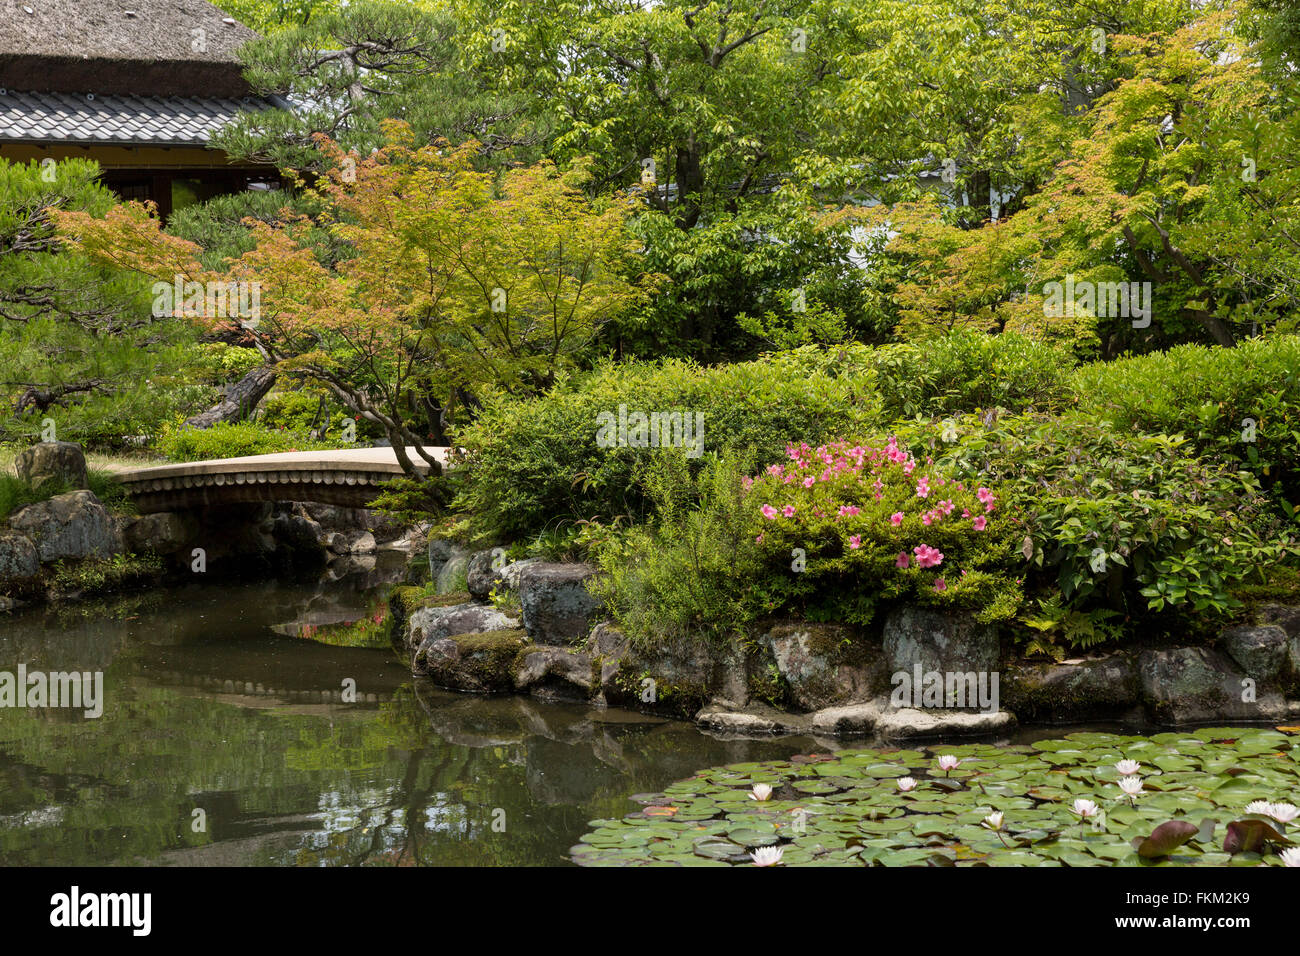 Isuien's pond and back garden, Nara, Nara Prefecture, Kansai region of Japan. Stock Photo